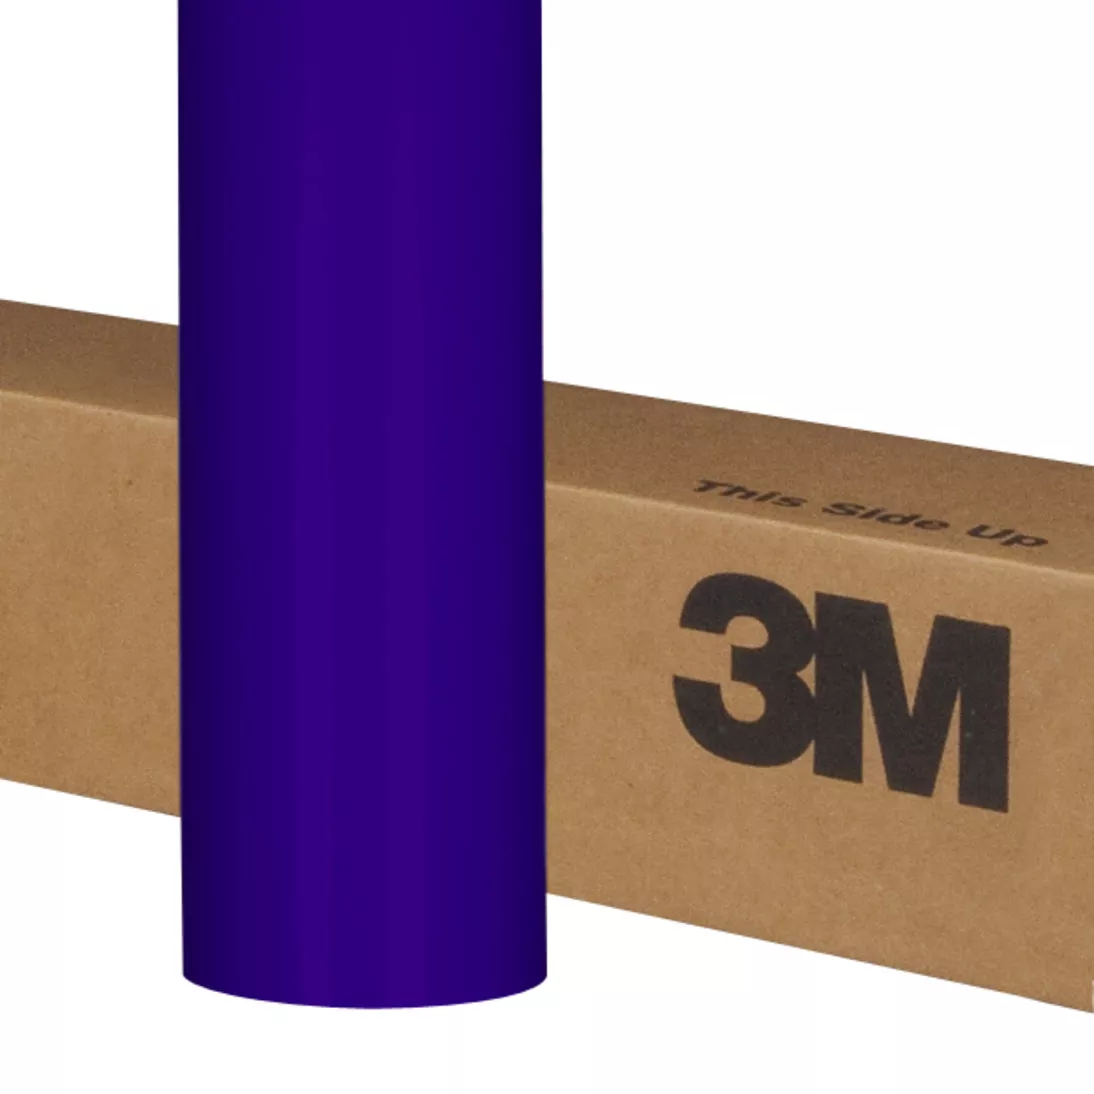 3M™ Scotchcal™ ElectroCut™ Graphic Film 7125-38, Royal Purple, 48 in x
50 yd